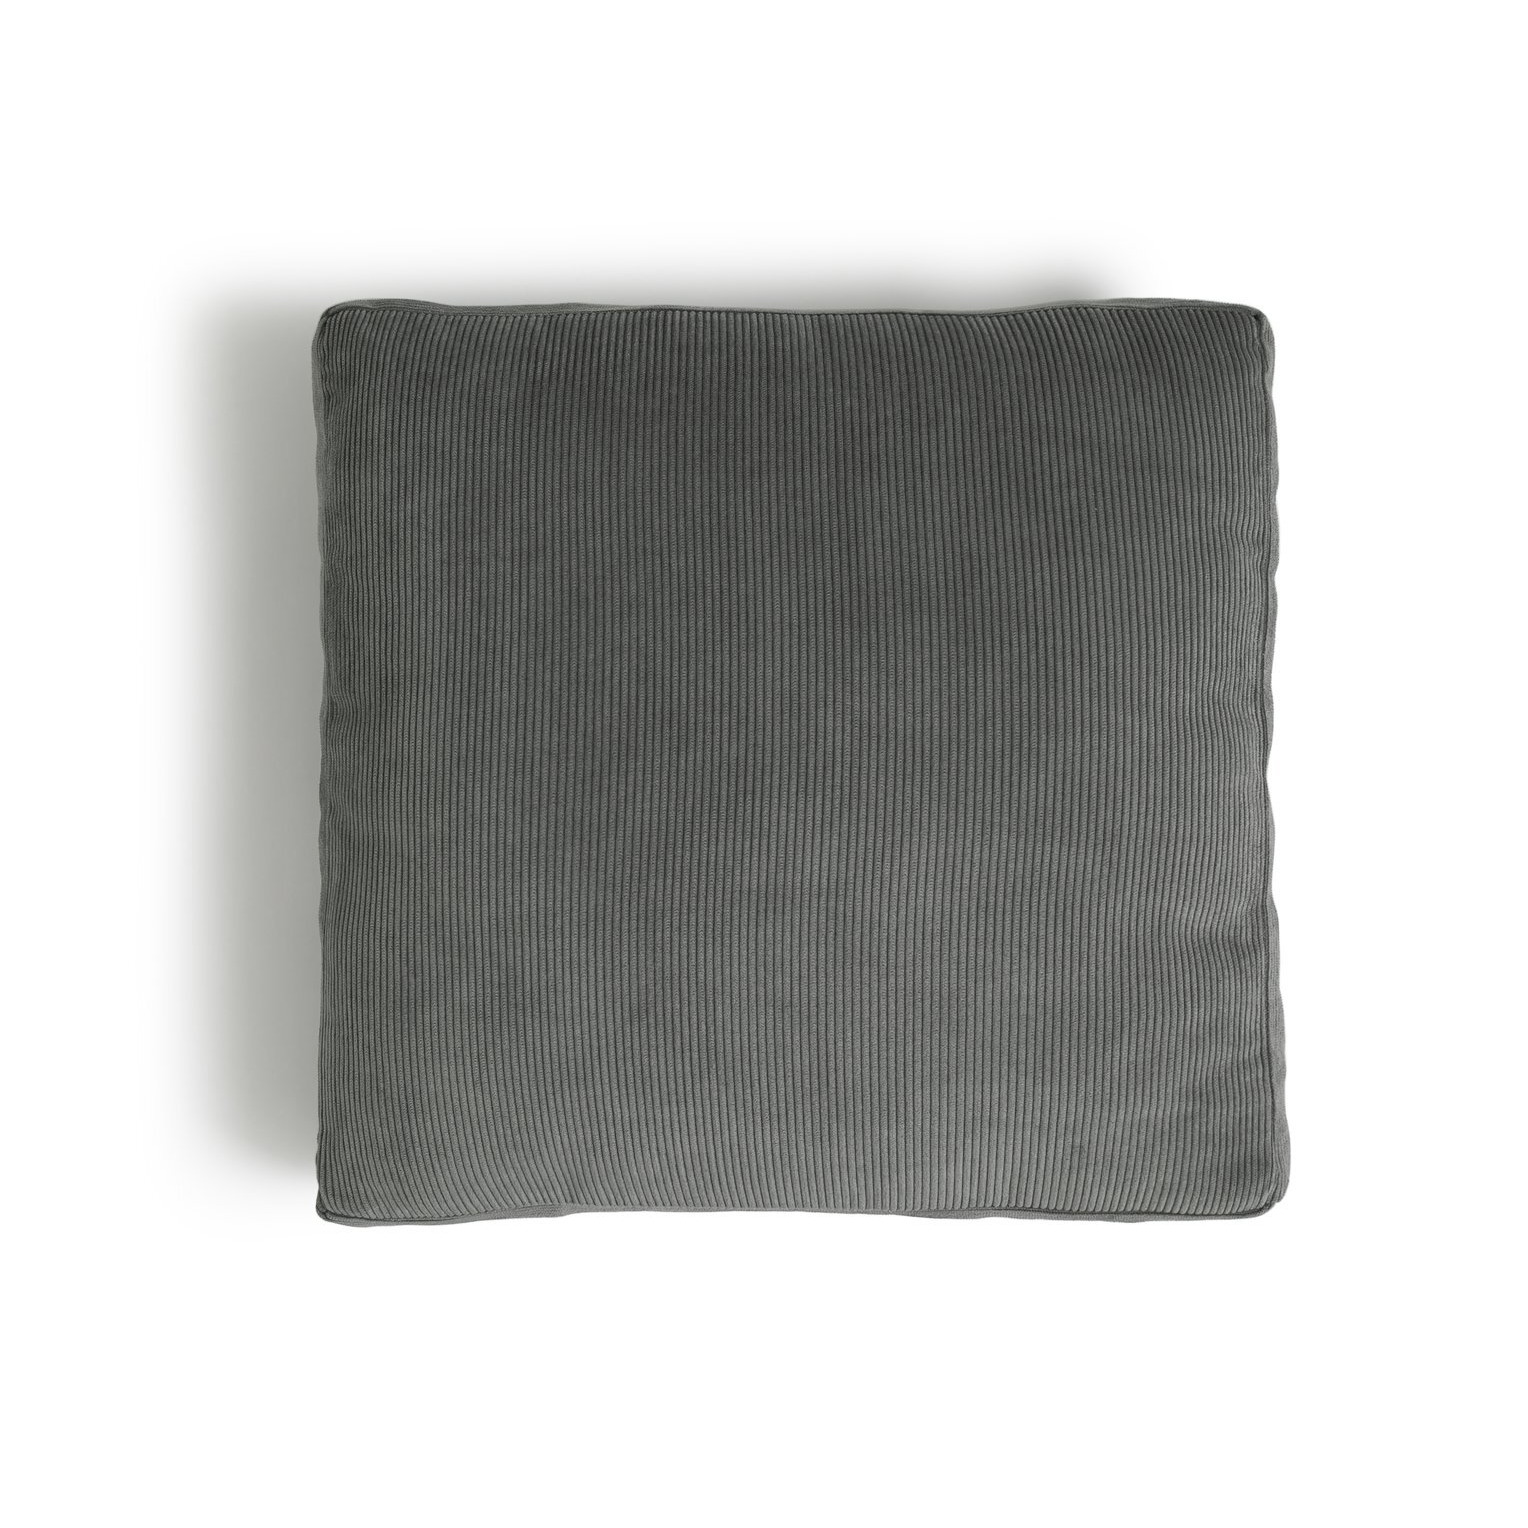 Habitat Cord Cushion Cover - Grey - 50x50cm - image 1